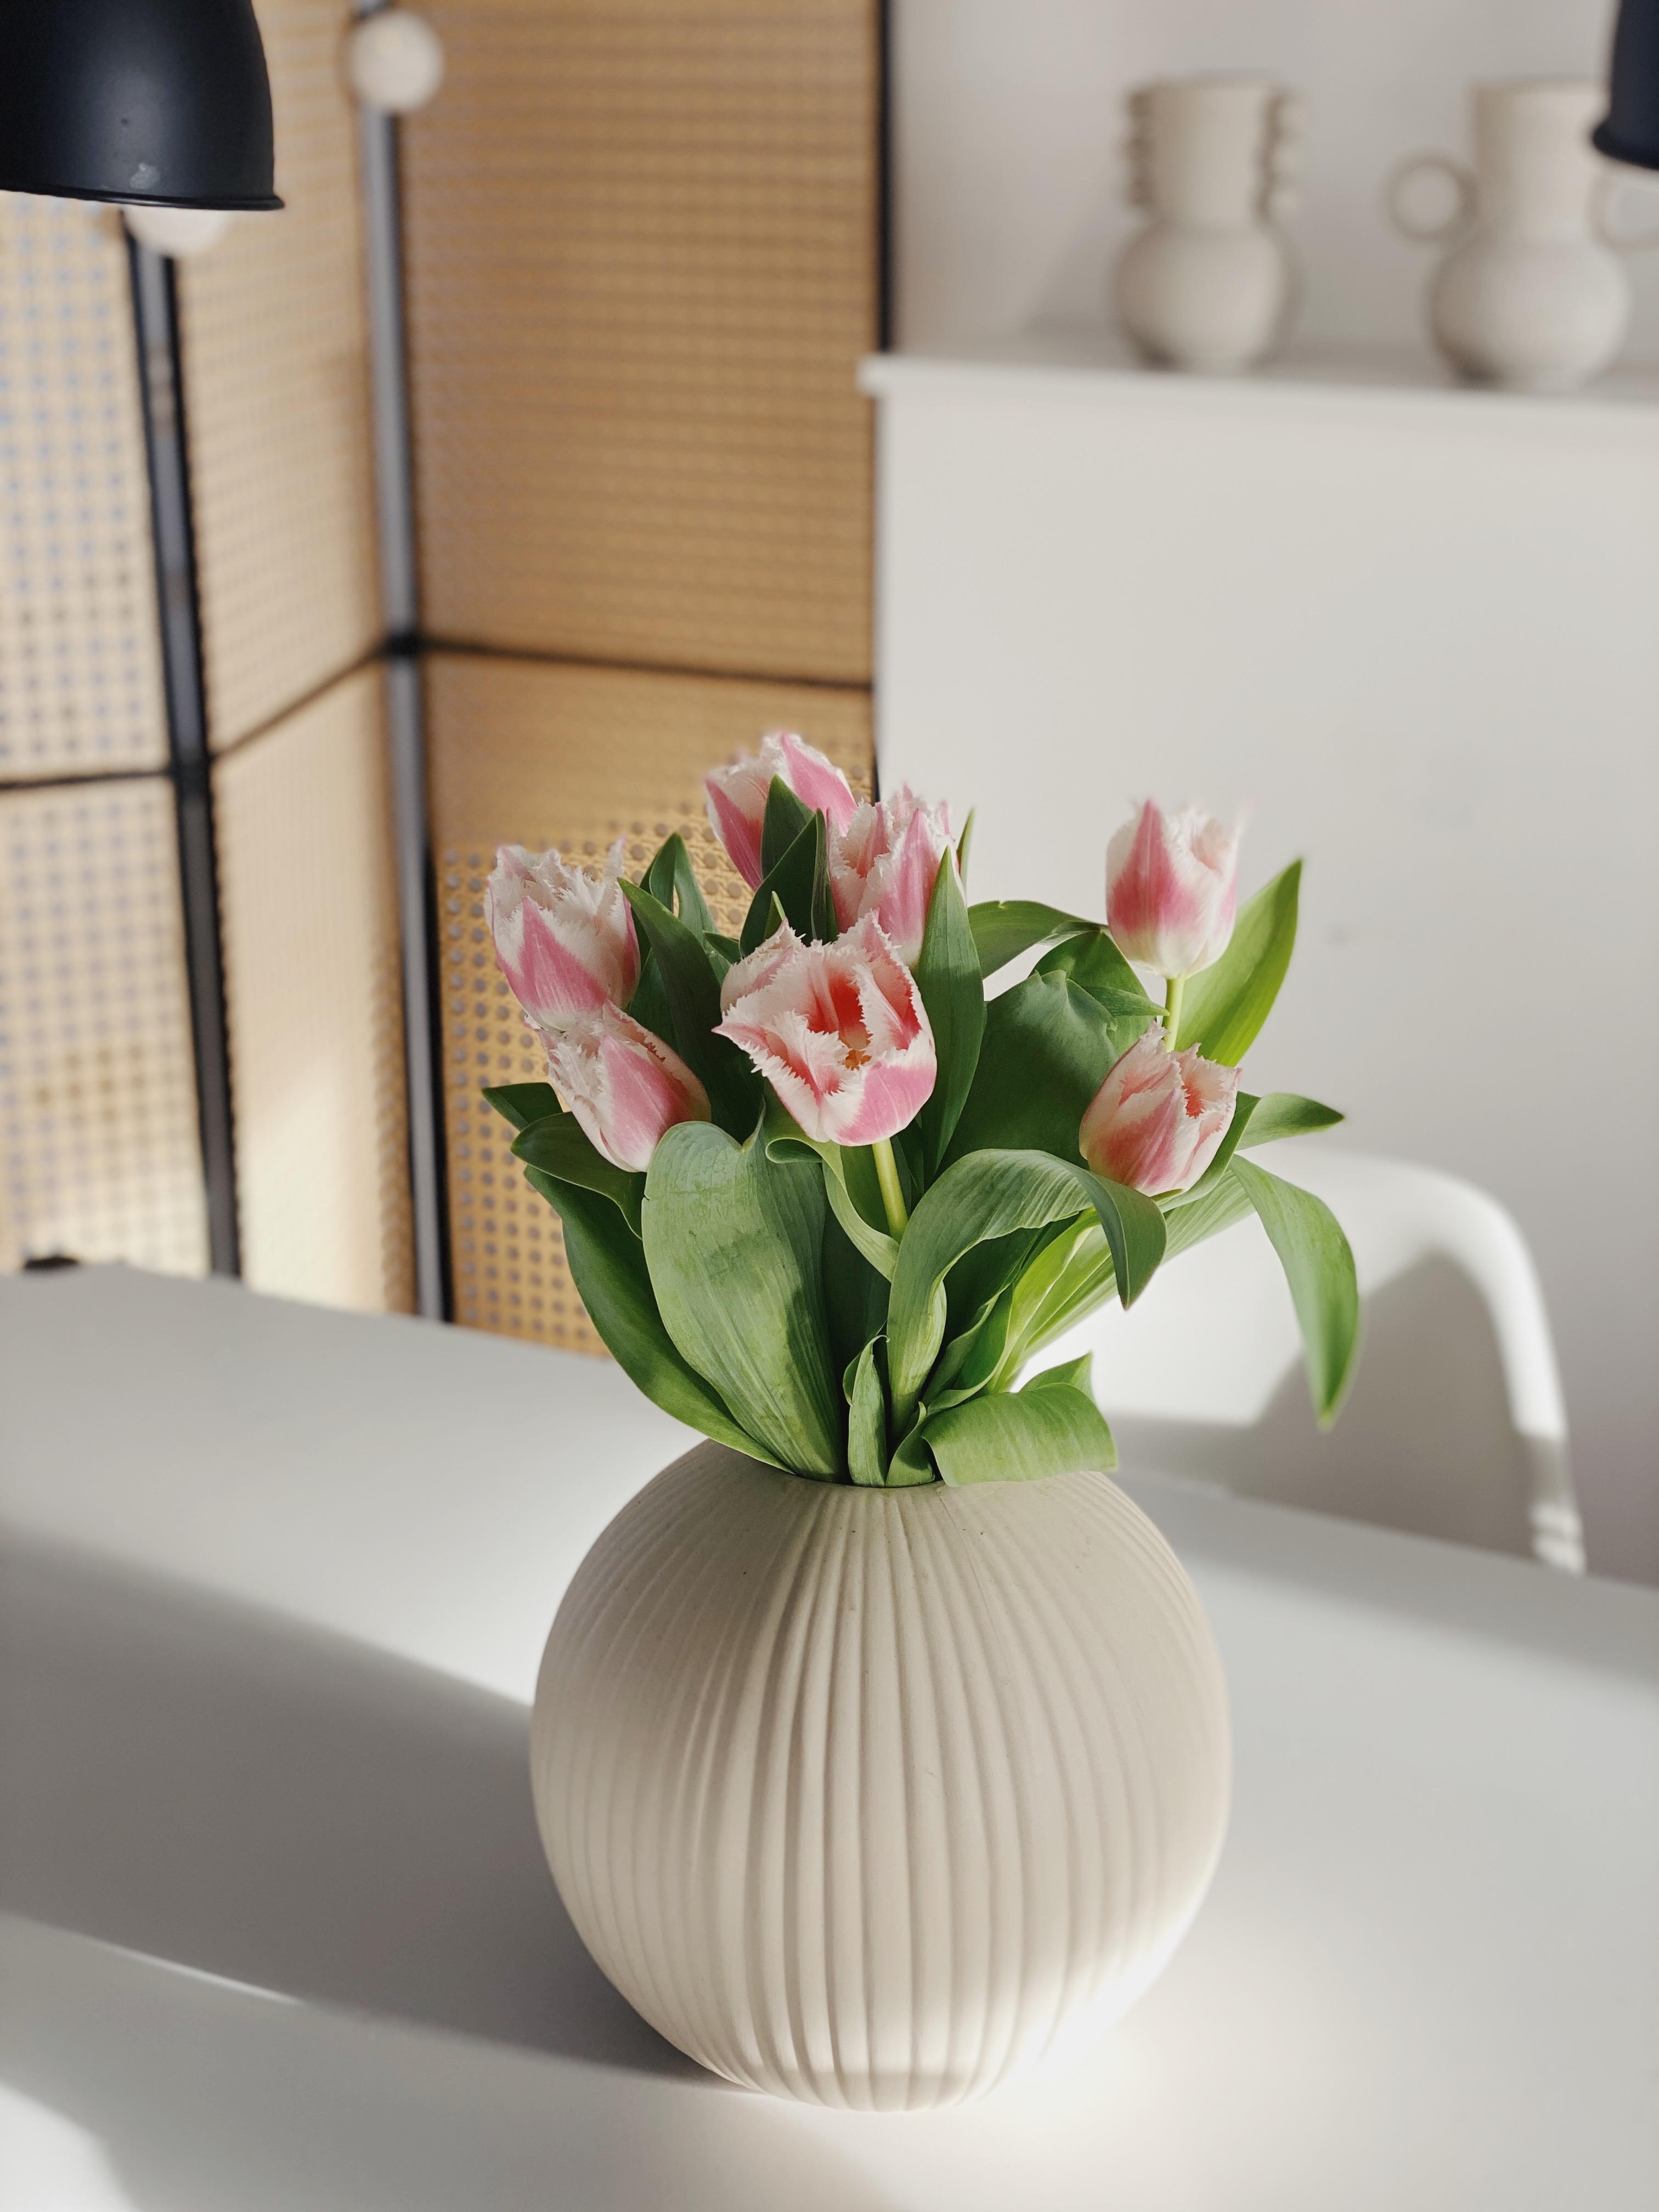 Tulpen gegen Januarblues 🌷🌷🌷
#tulpen #tulpenliebe #blumendeko #vase #deko #blumen #inspiration